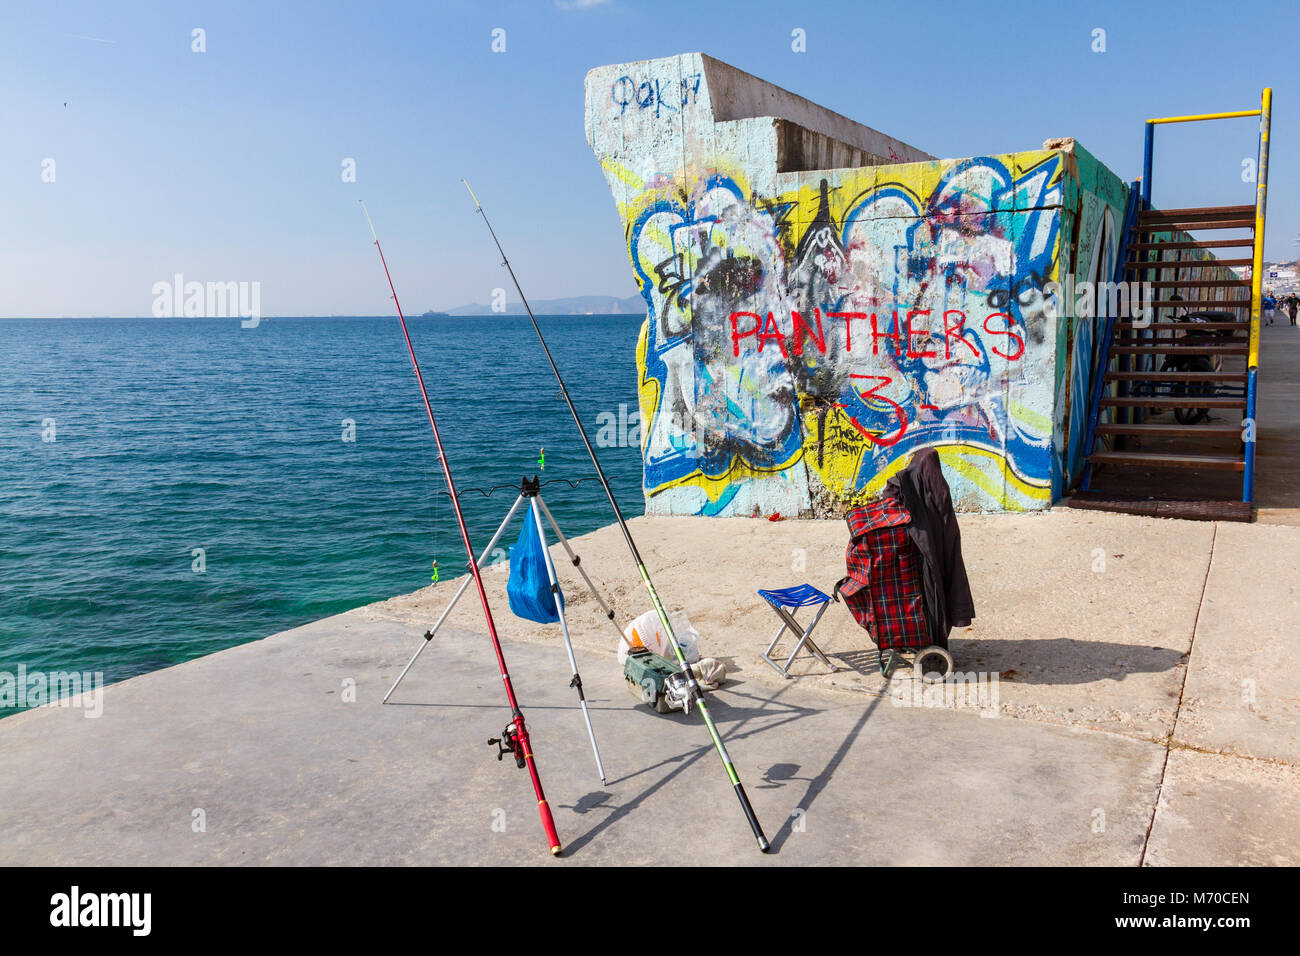 Athen, Griechenland - 17. Februar 2018: unbeaufsichtigt Angelruten an der Promenade gegen eine Wand mit Graffiti an Palaio Faliro in Athen, Griechenland Stockfoto